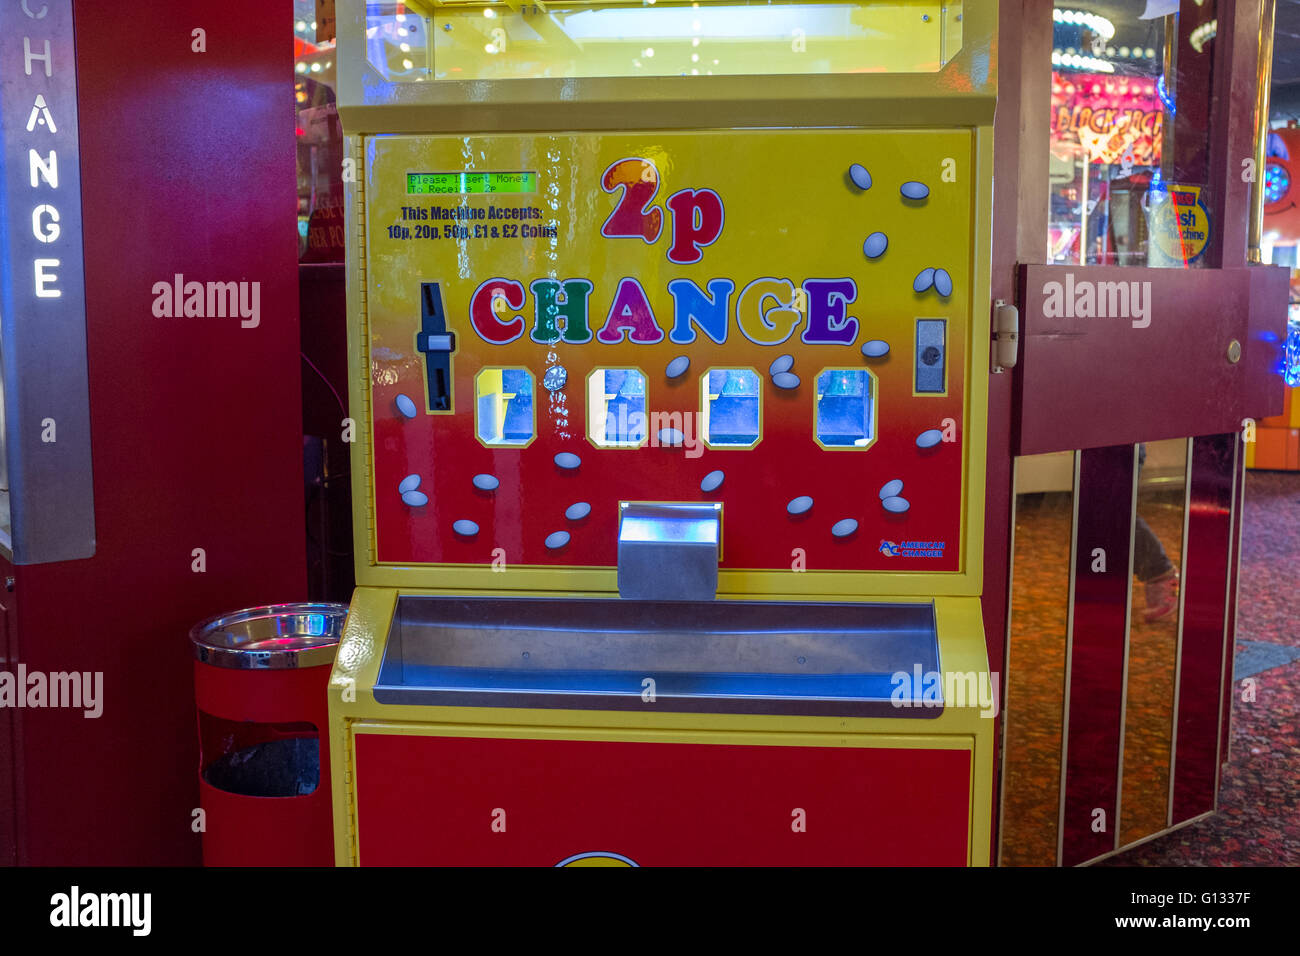 2p change machine at an Amusement arcade on Morecambe seafront, UK Stock Photo